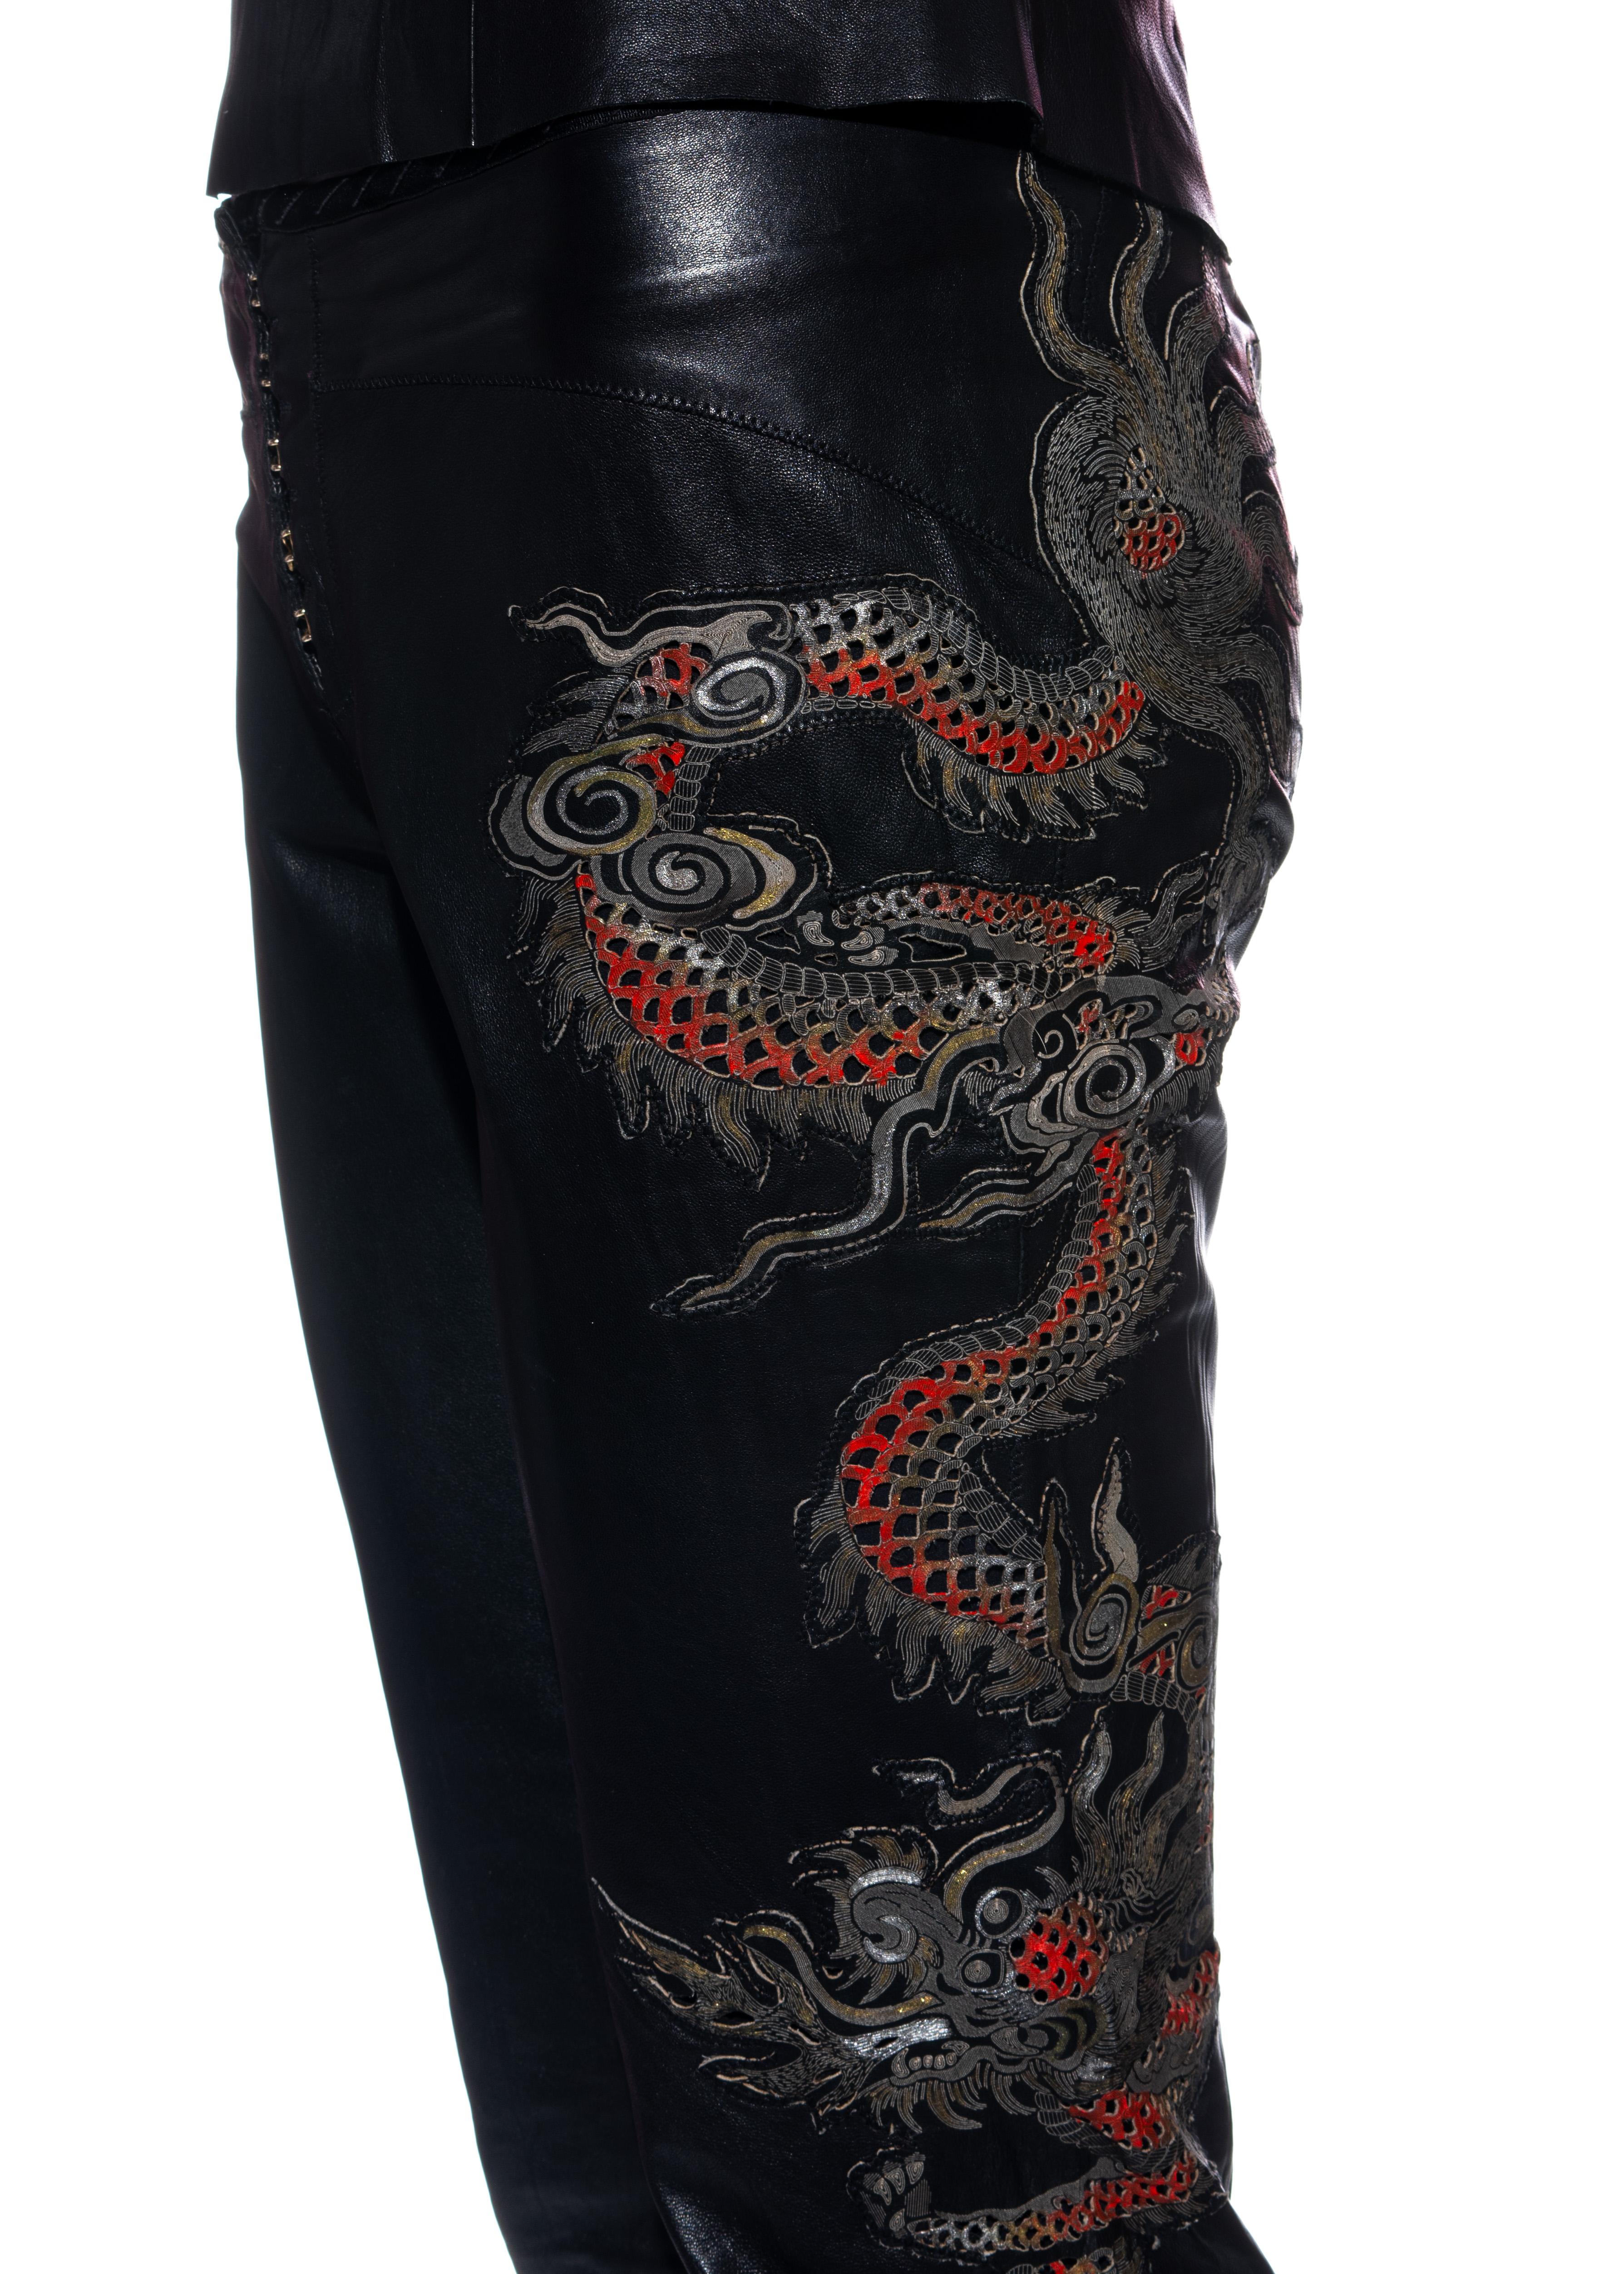 Women's Roberto Cavalli black leather cheongsam pant suit with dragon design, ss 2003